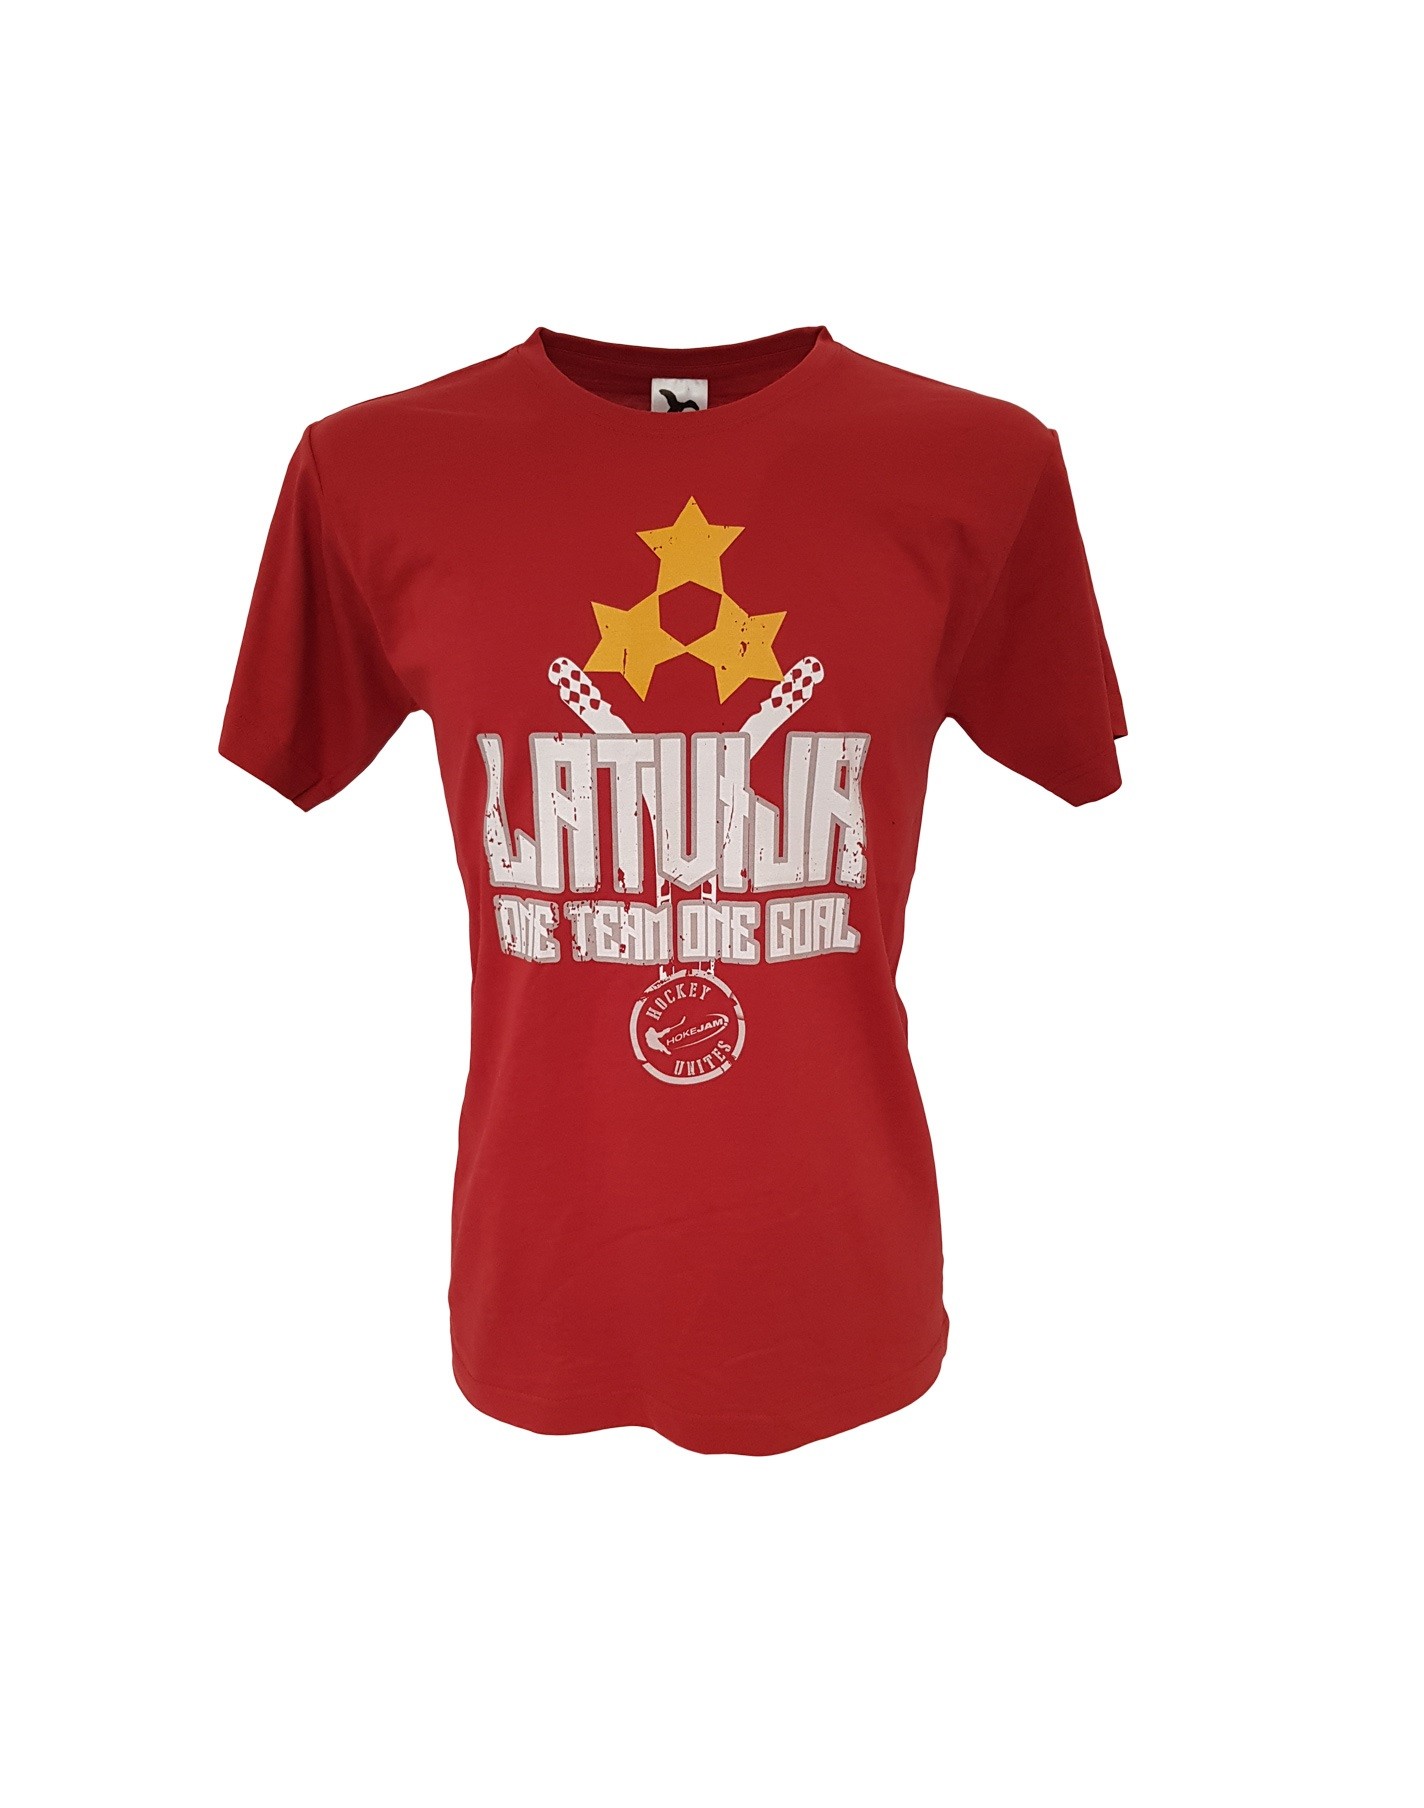 HOKEJAM Latvija One Team One Goal Adult T-Shirt,Latvian Fan T-Shirt,Clothing